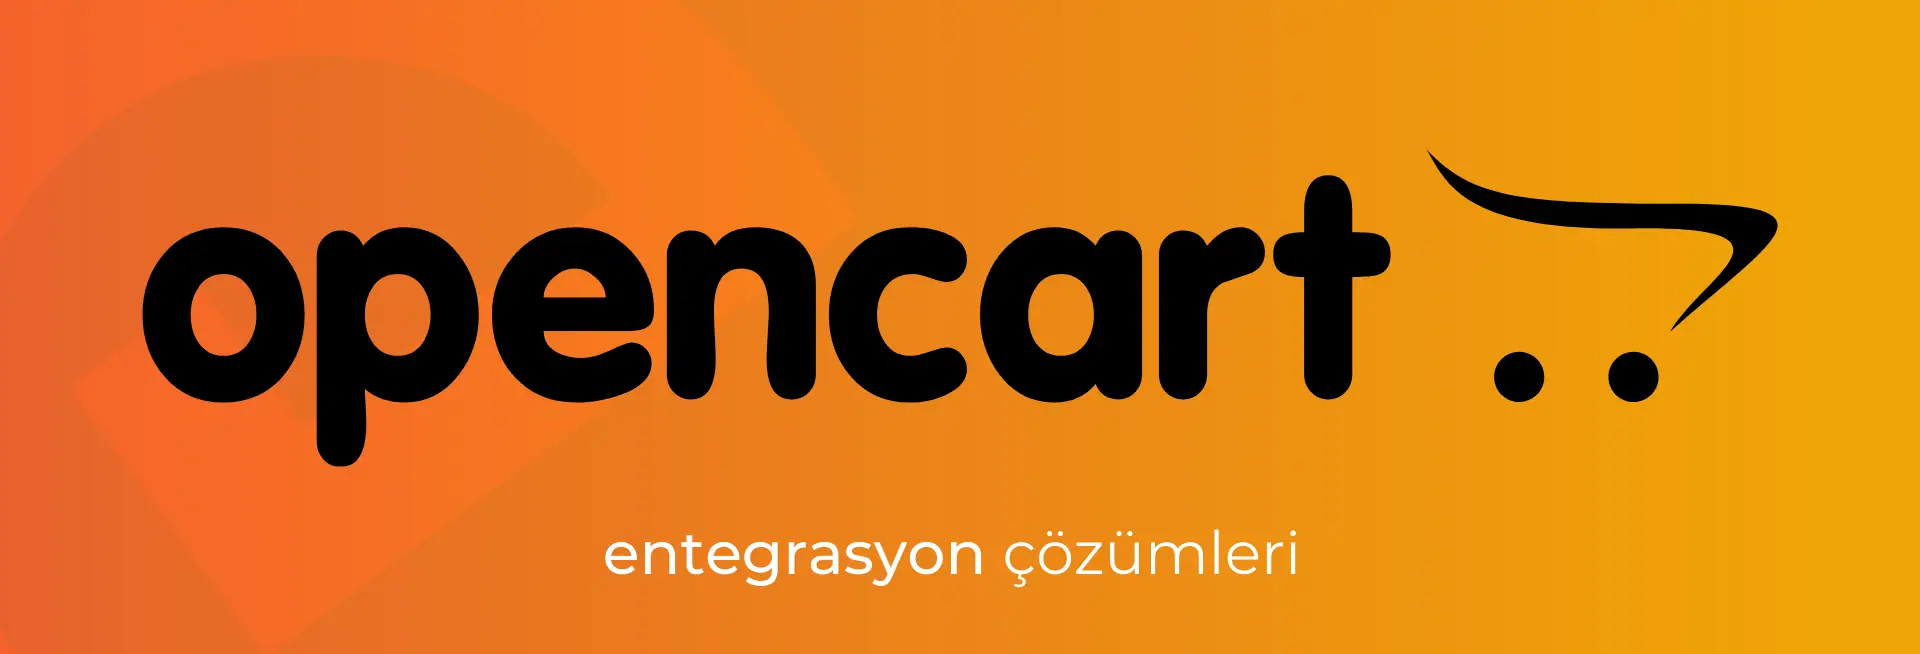 opencart entegrasyonu